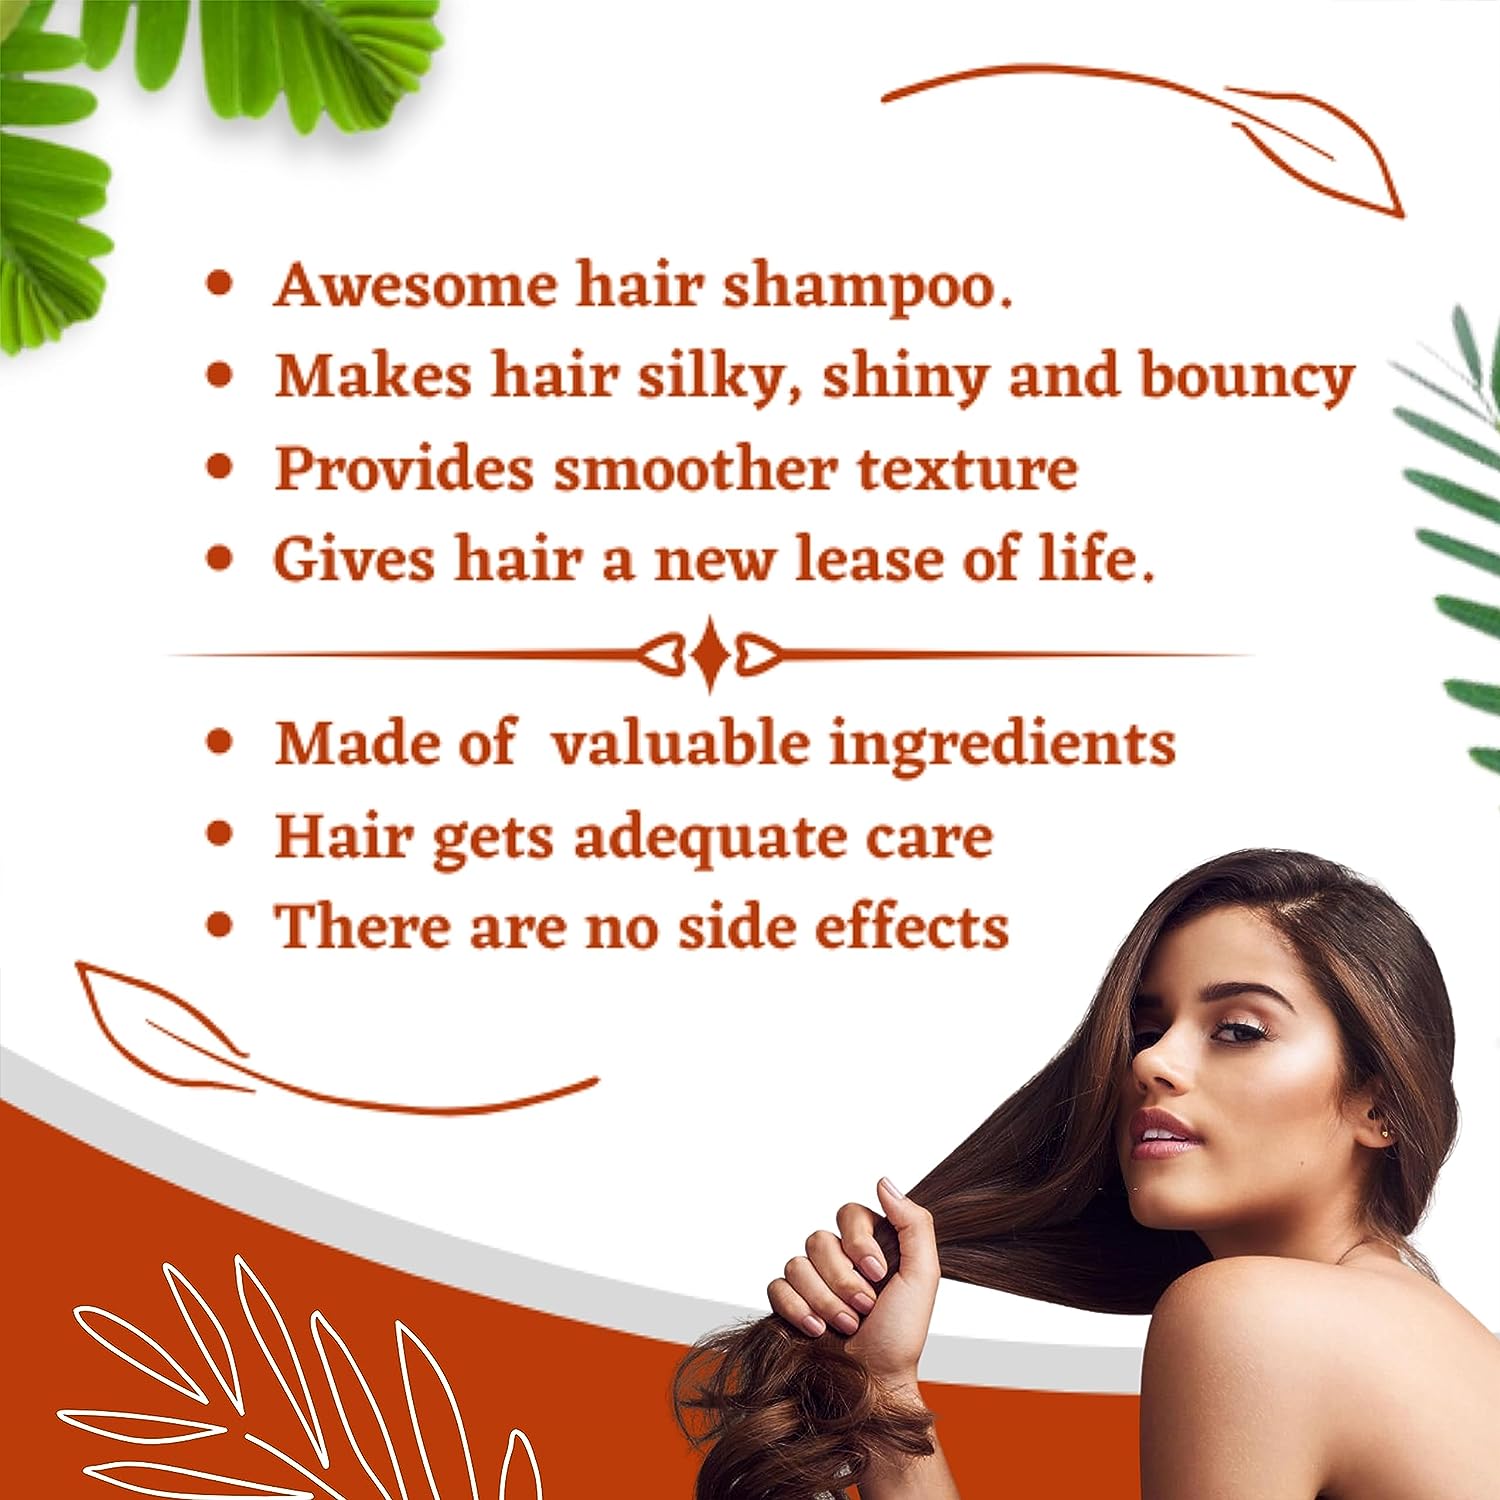 Havintha Natural Hair Shampoo With Methi Dana, Amla, Reetha and Shikakai | Promotes Hair Growth- 227 Grams